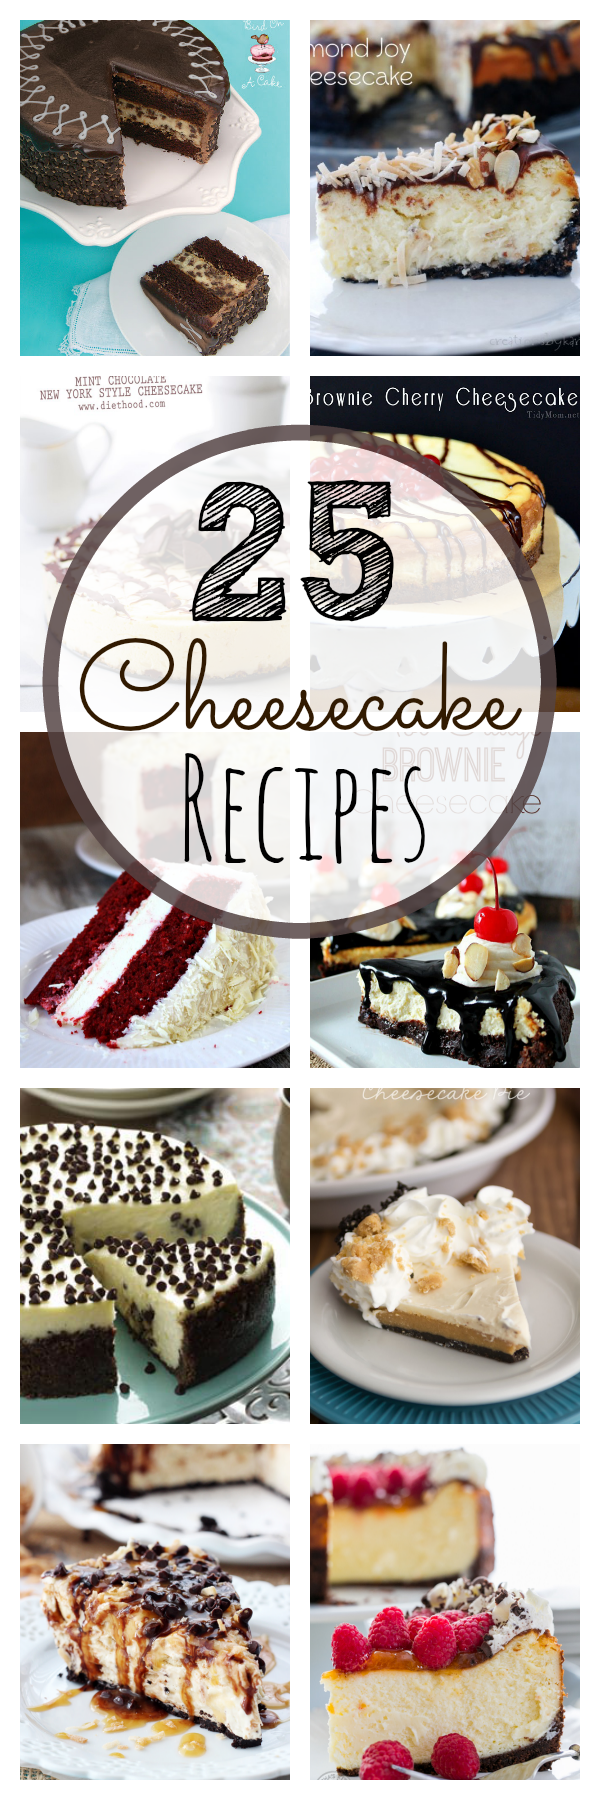 25 Amazing Cheesecake Recipes